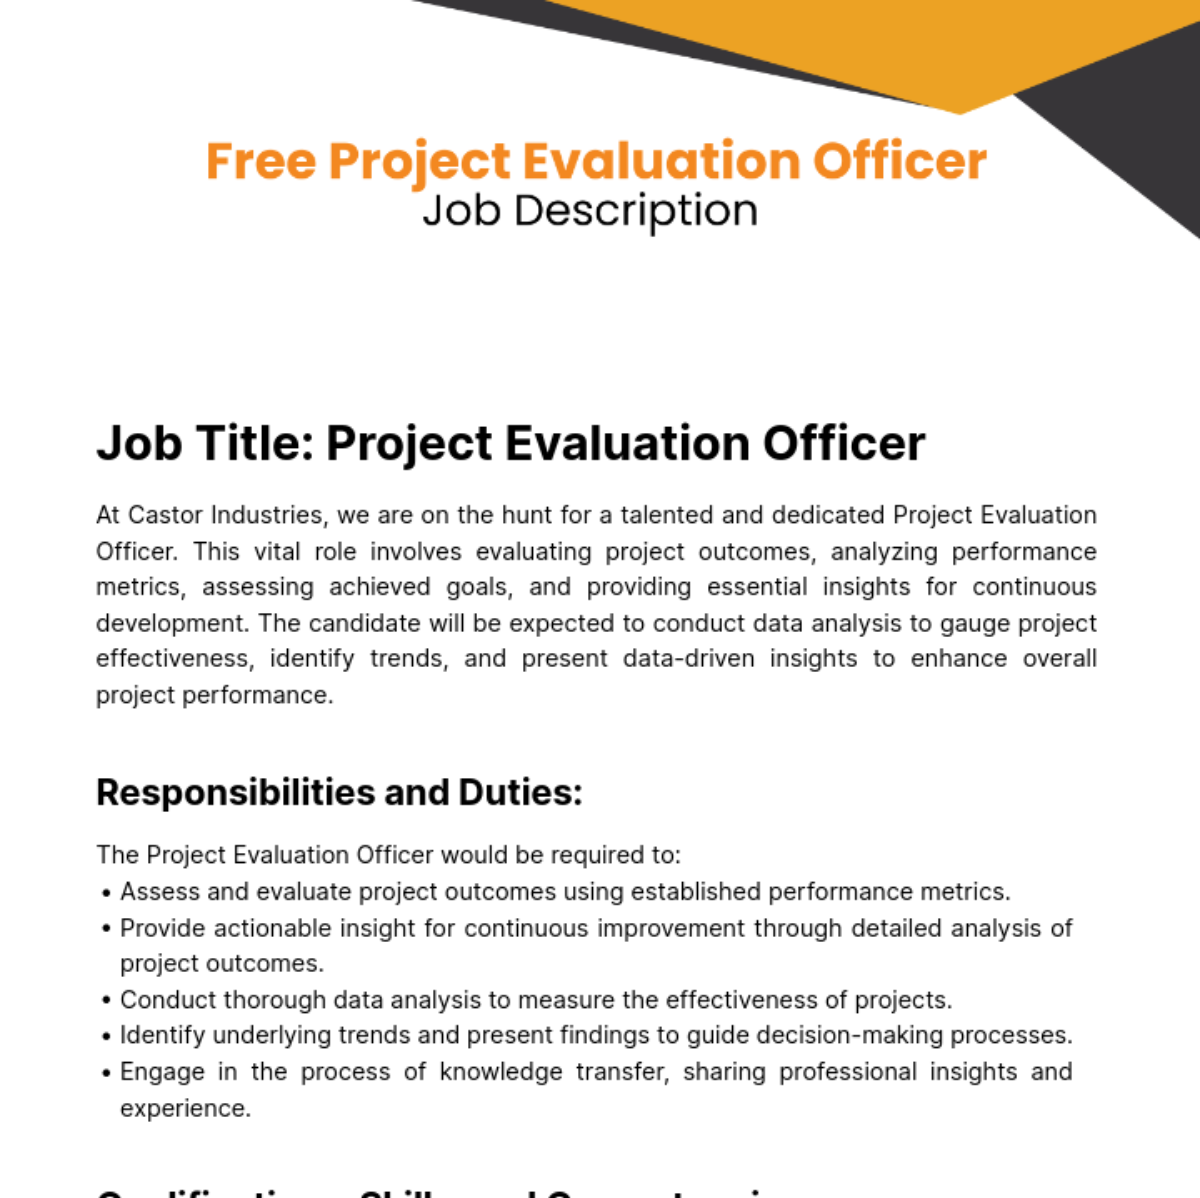 Free Project Evaluation Officer Job Description Template